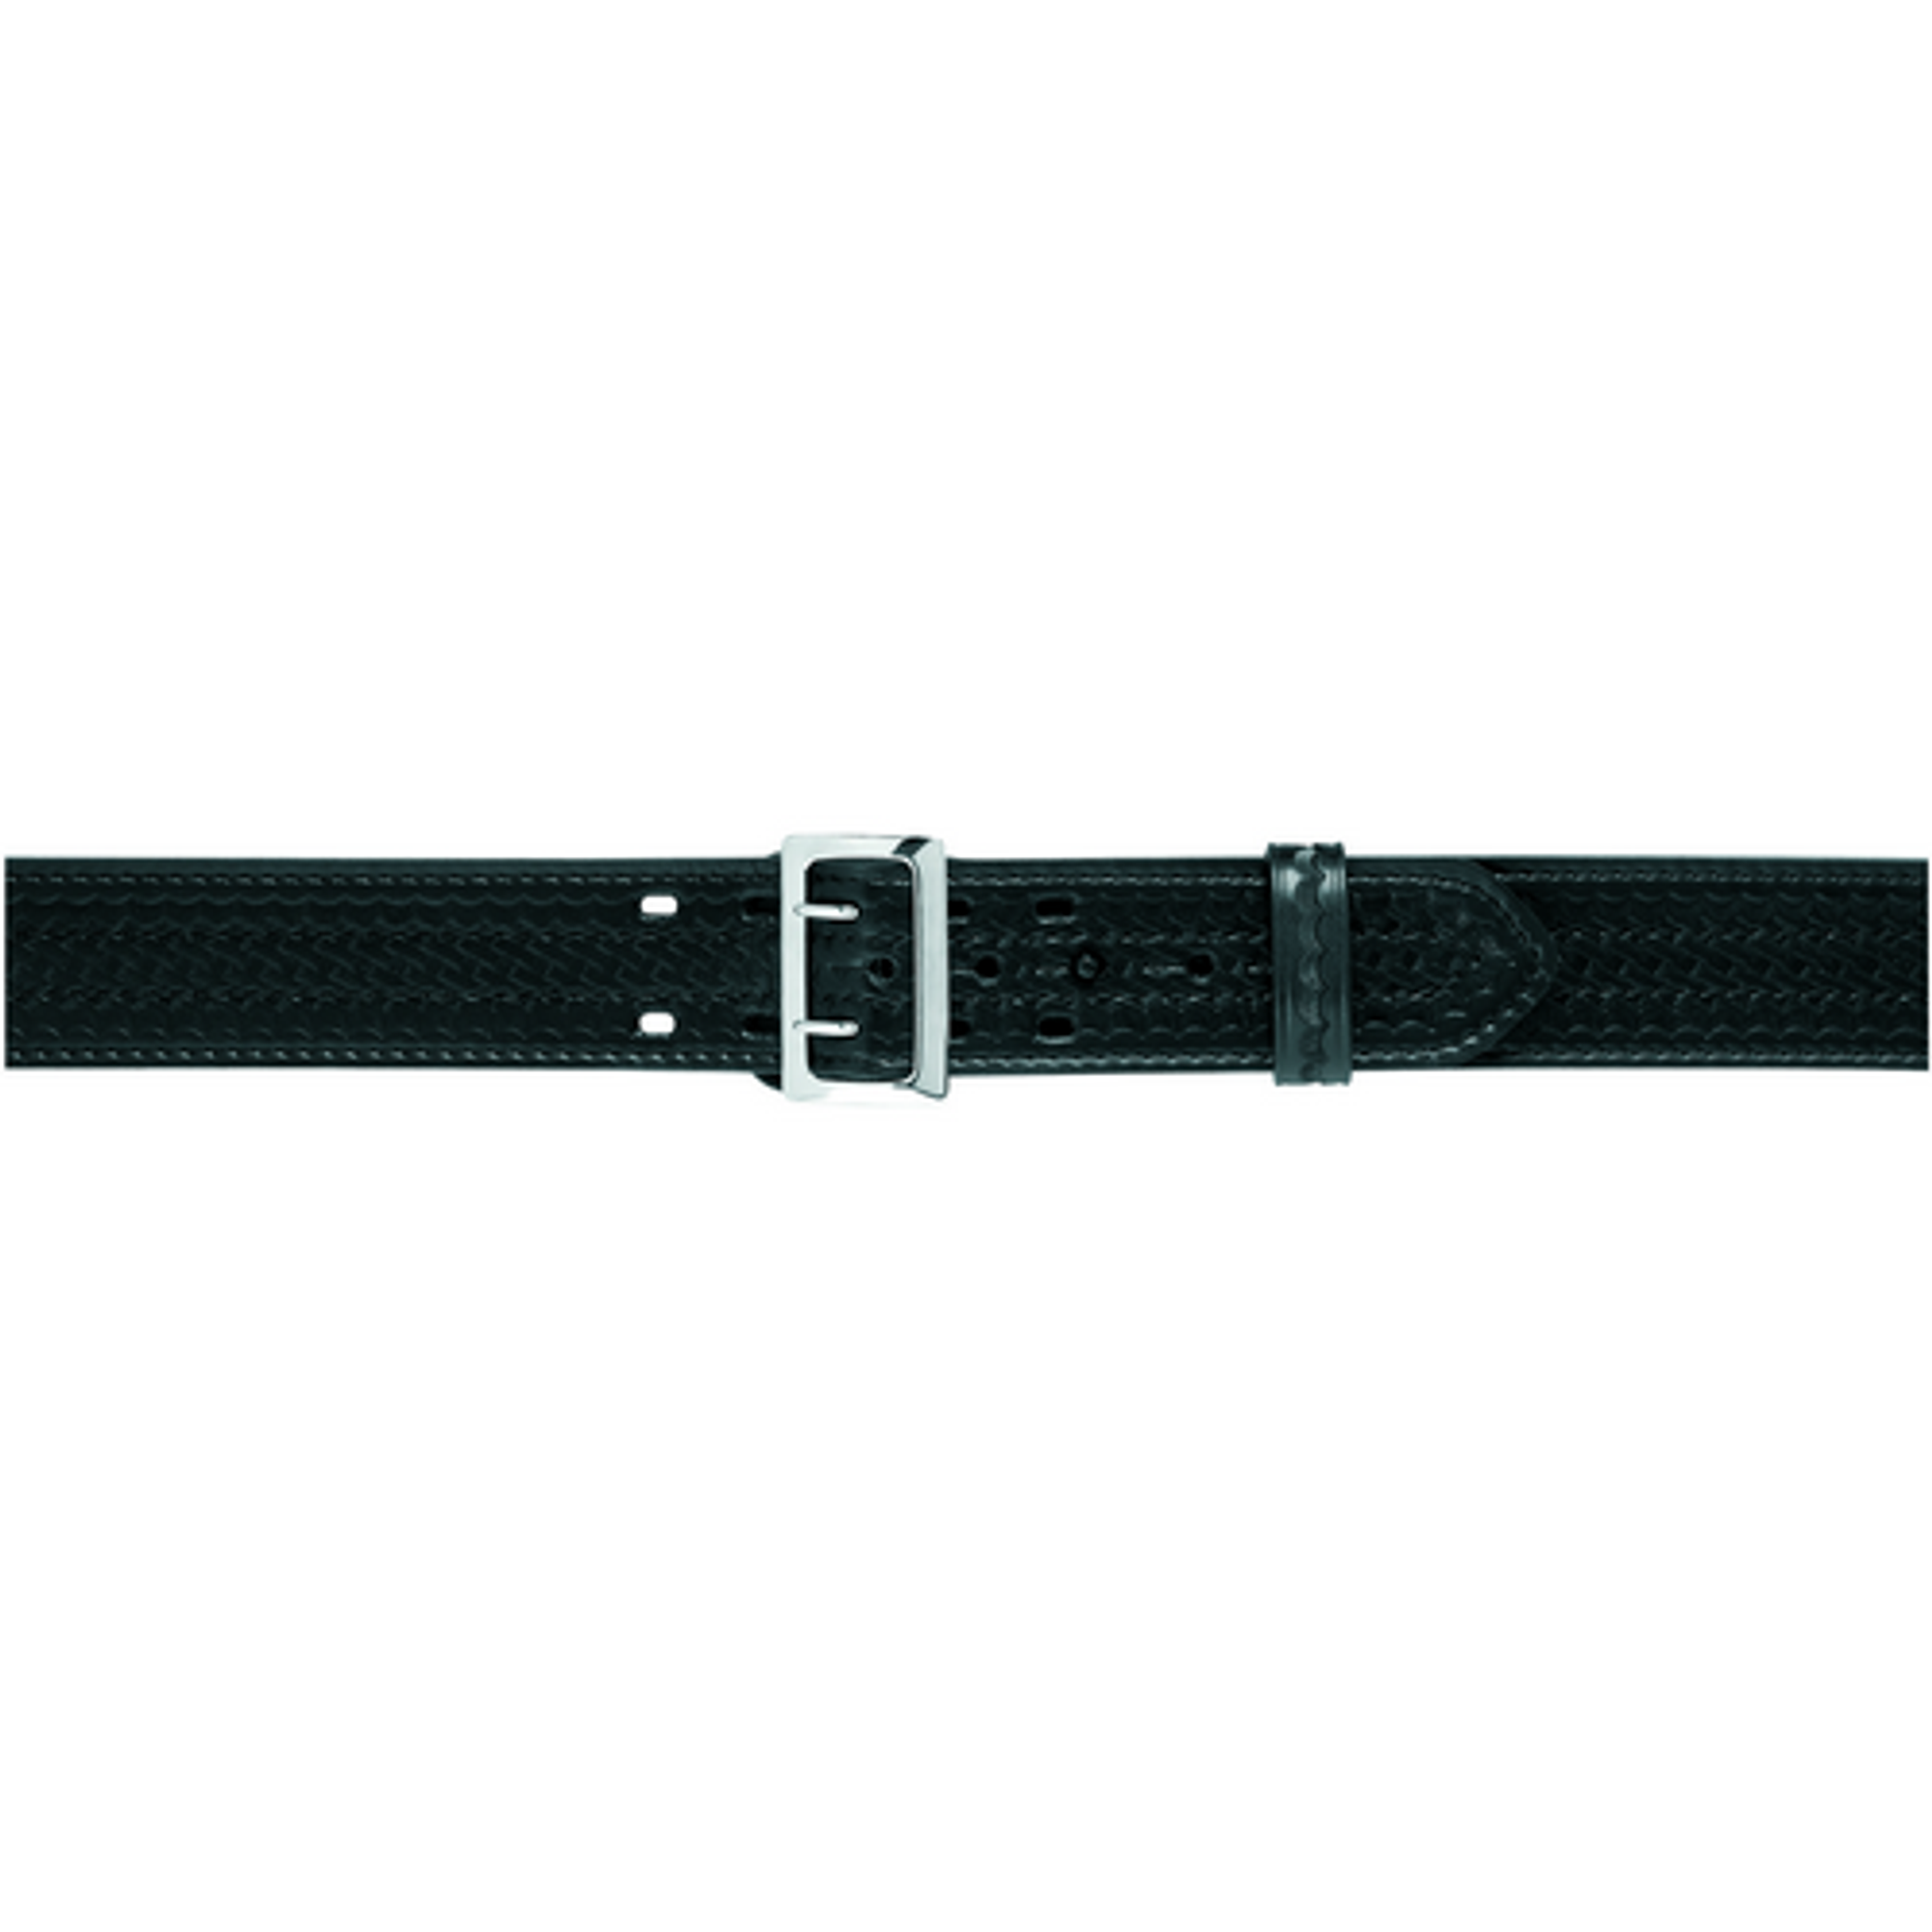 875 - Stitched Edge Sam Browne Duty Belt 2.25 (58mm) - KR875-36-8